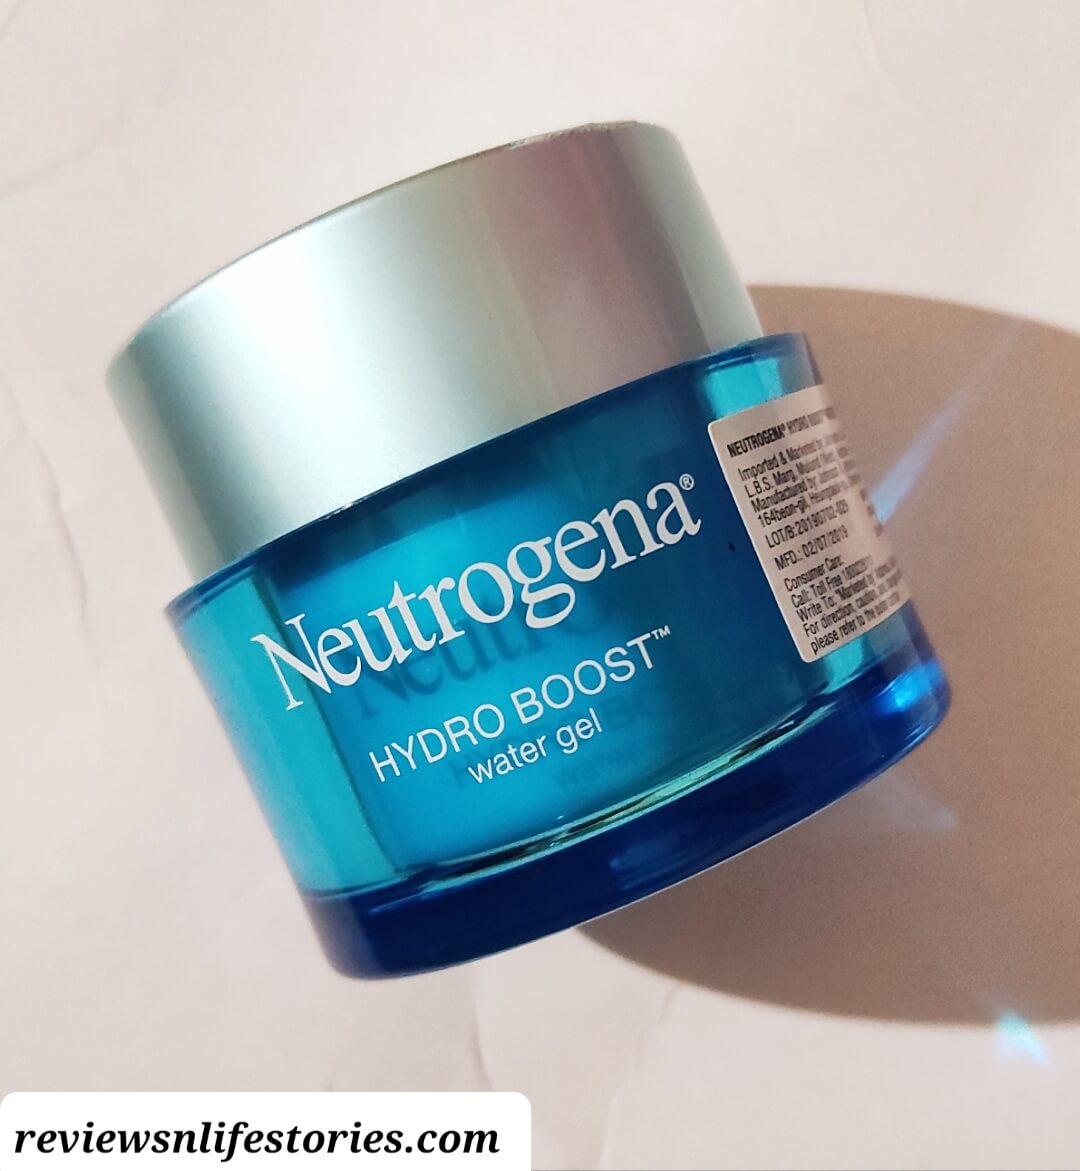 Neutrogena-hydroboost-moisturiser-review